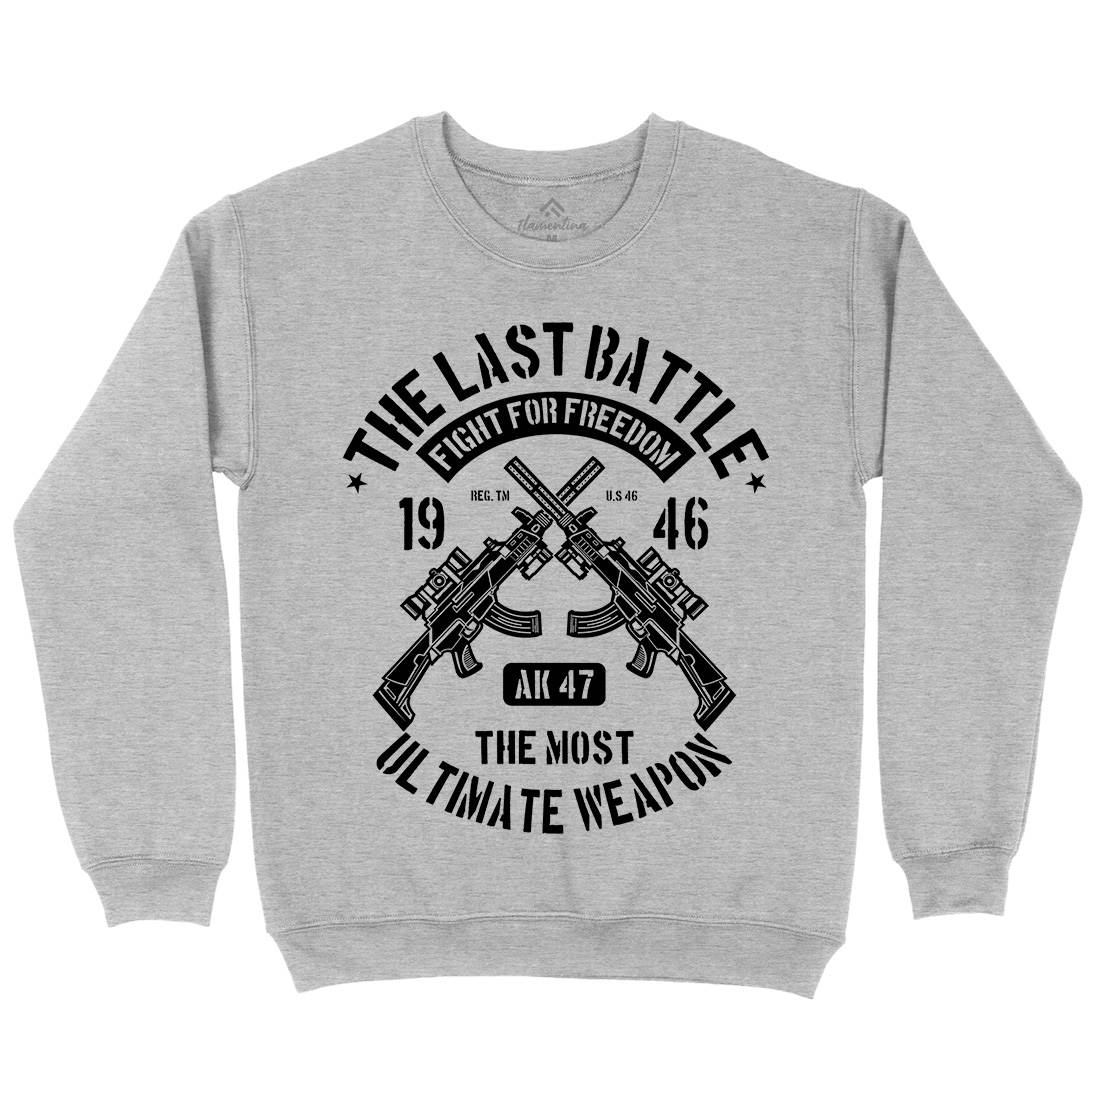 Last Battle Kids Crew Neck Sweatshirt Army A174